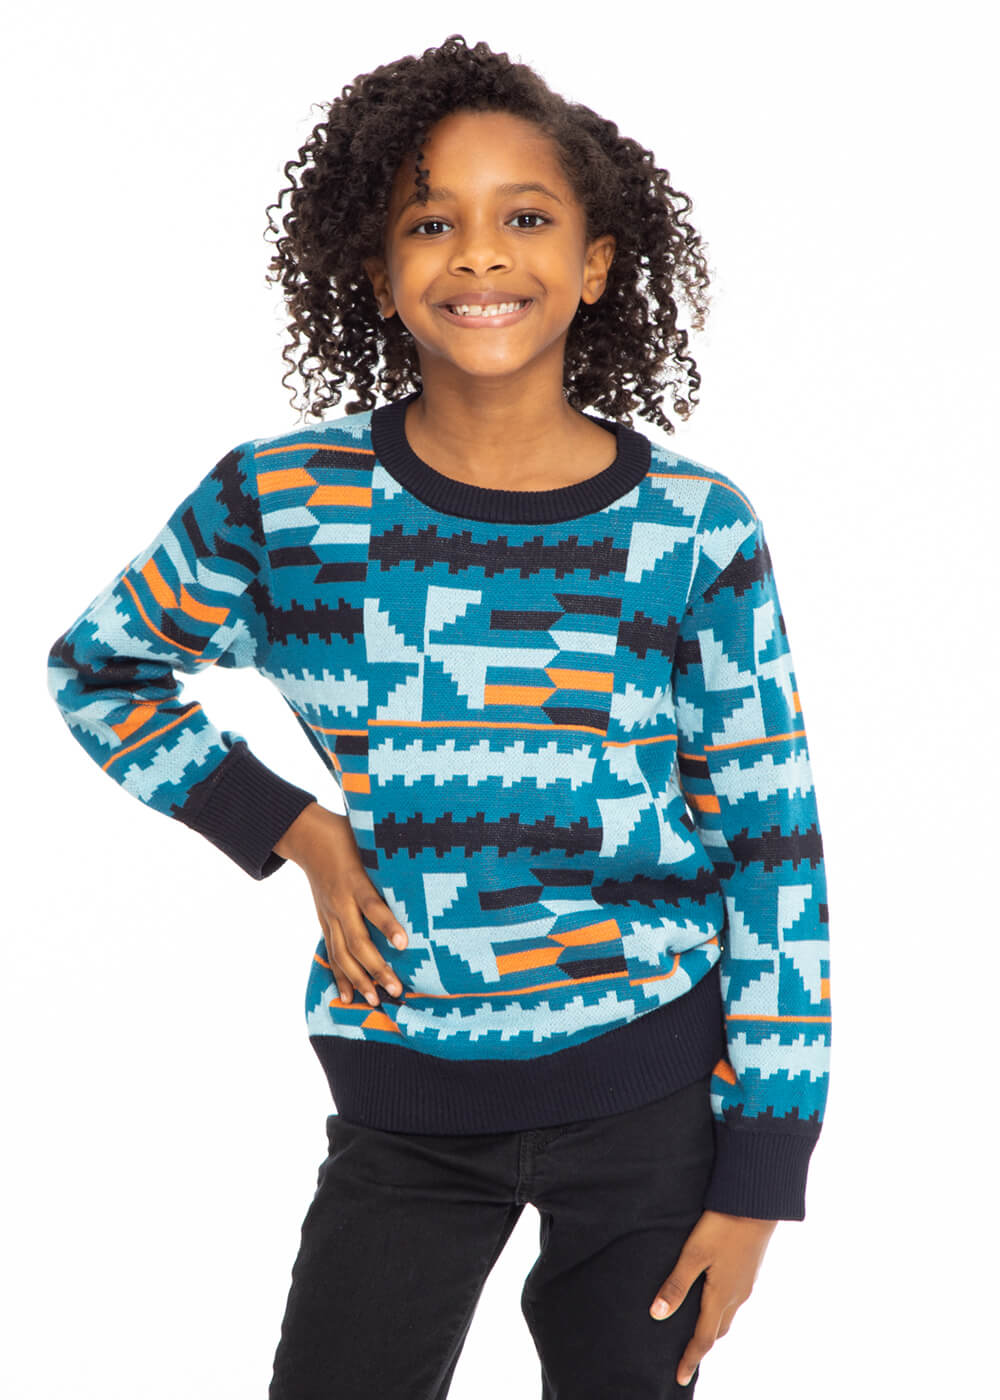 Oma African Print Kids' Sweater (Teal Kente)